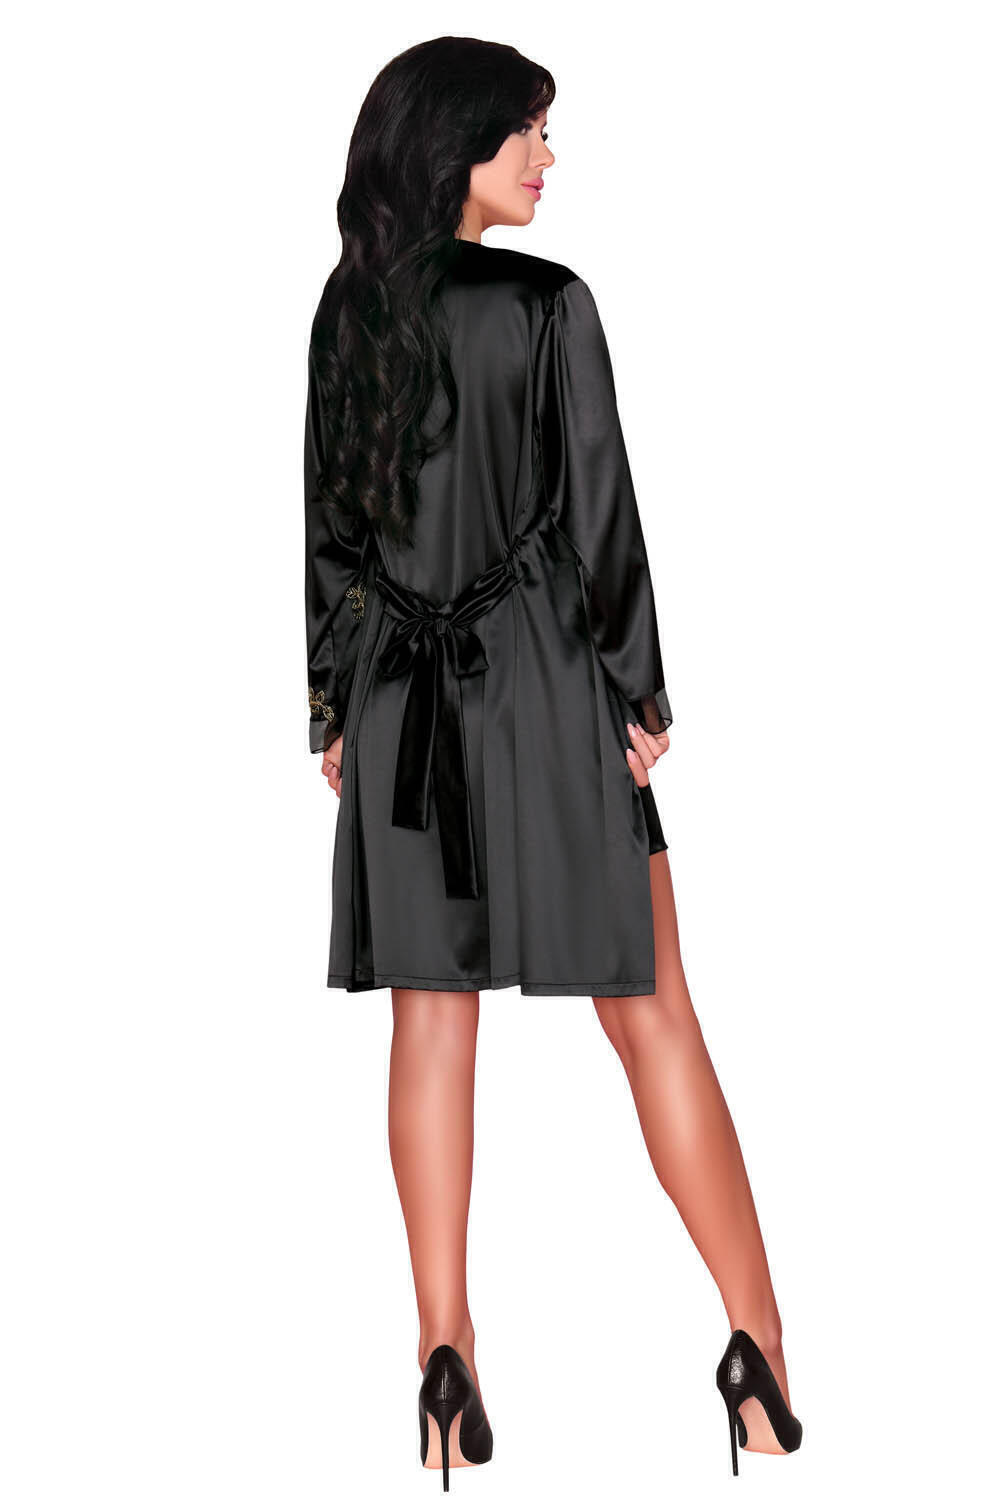 Пеньюары LivCo Corsetti Fashion LC 90367 Natasha szlafrok, Чёрный, L/XL